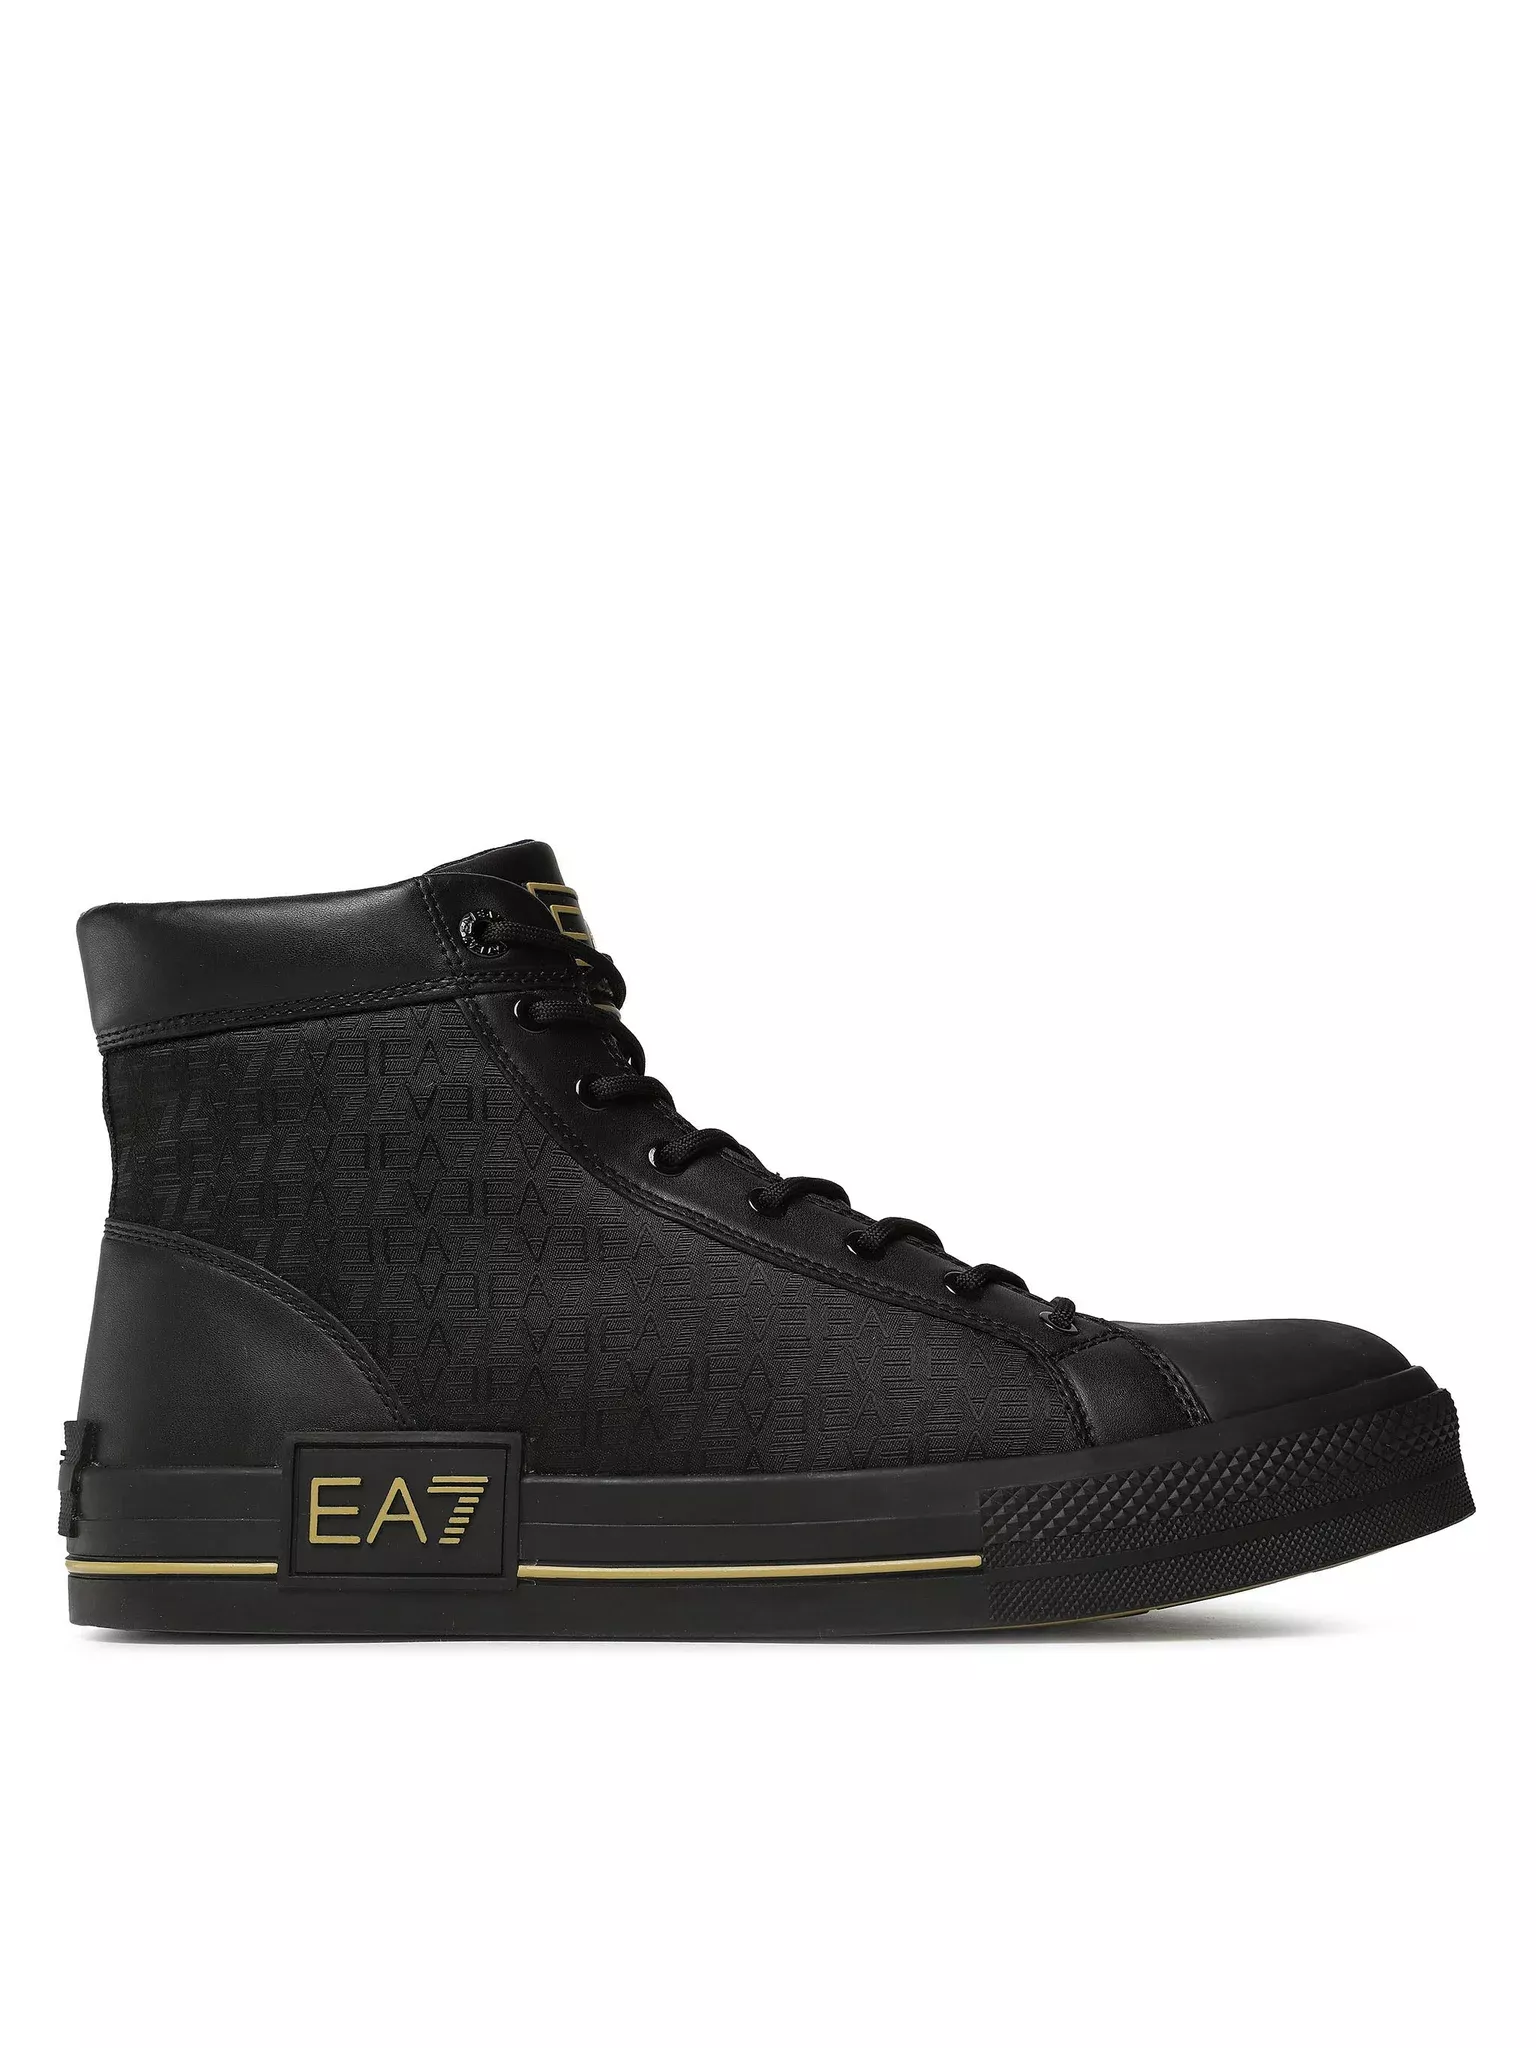 Sneakers / Sport  Ea7 X8Z037 XK294 M701 TRIPLE BLACK+GOLD